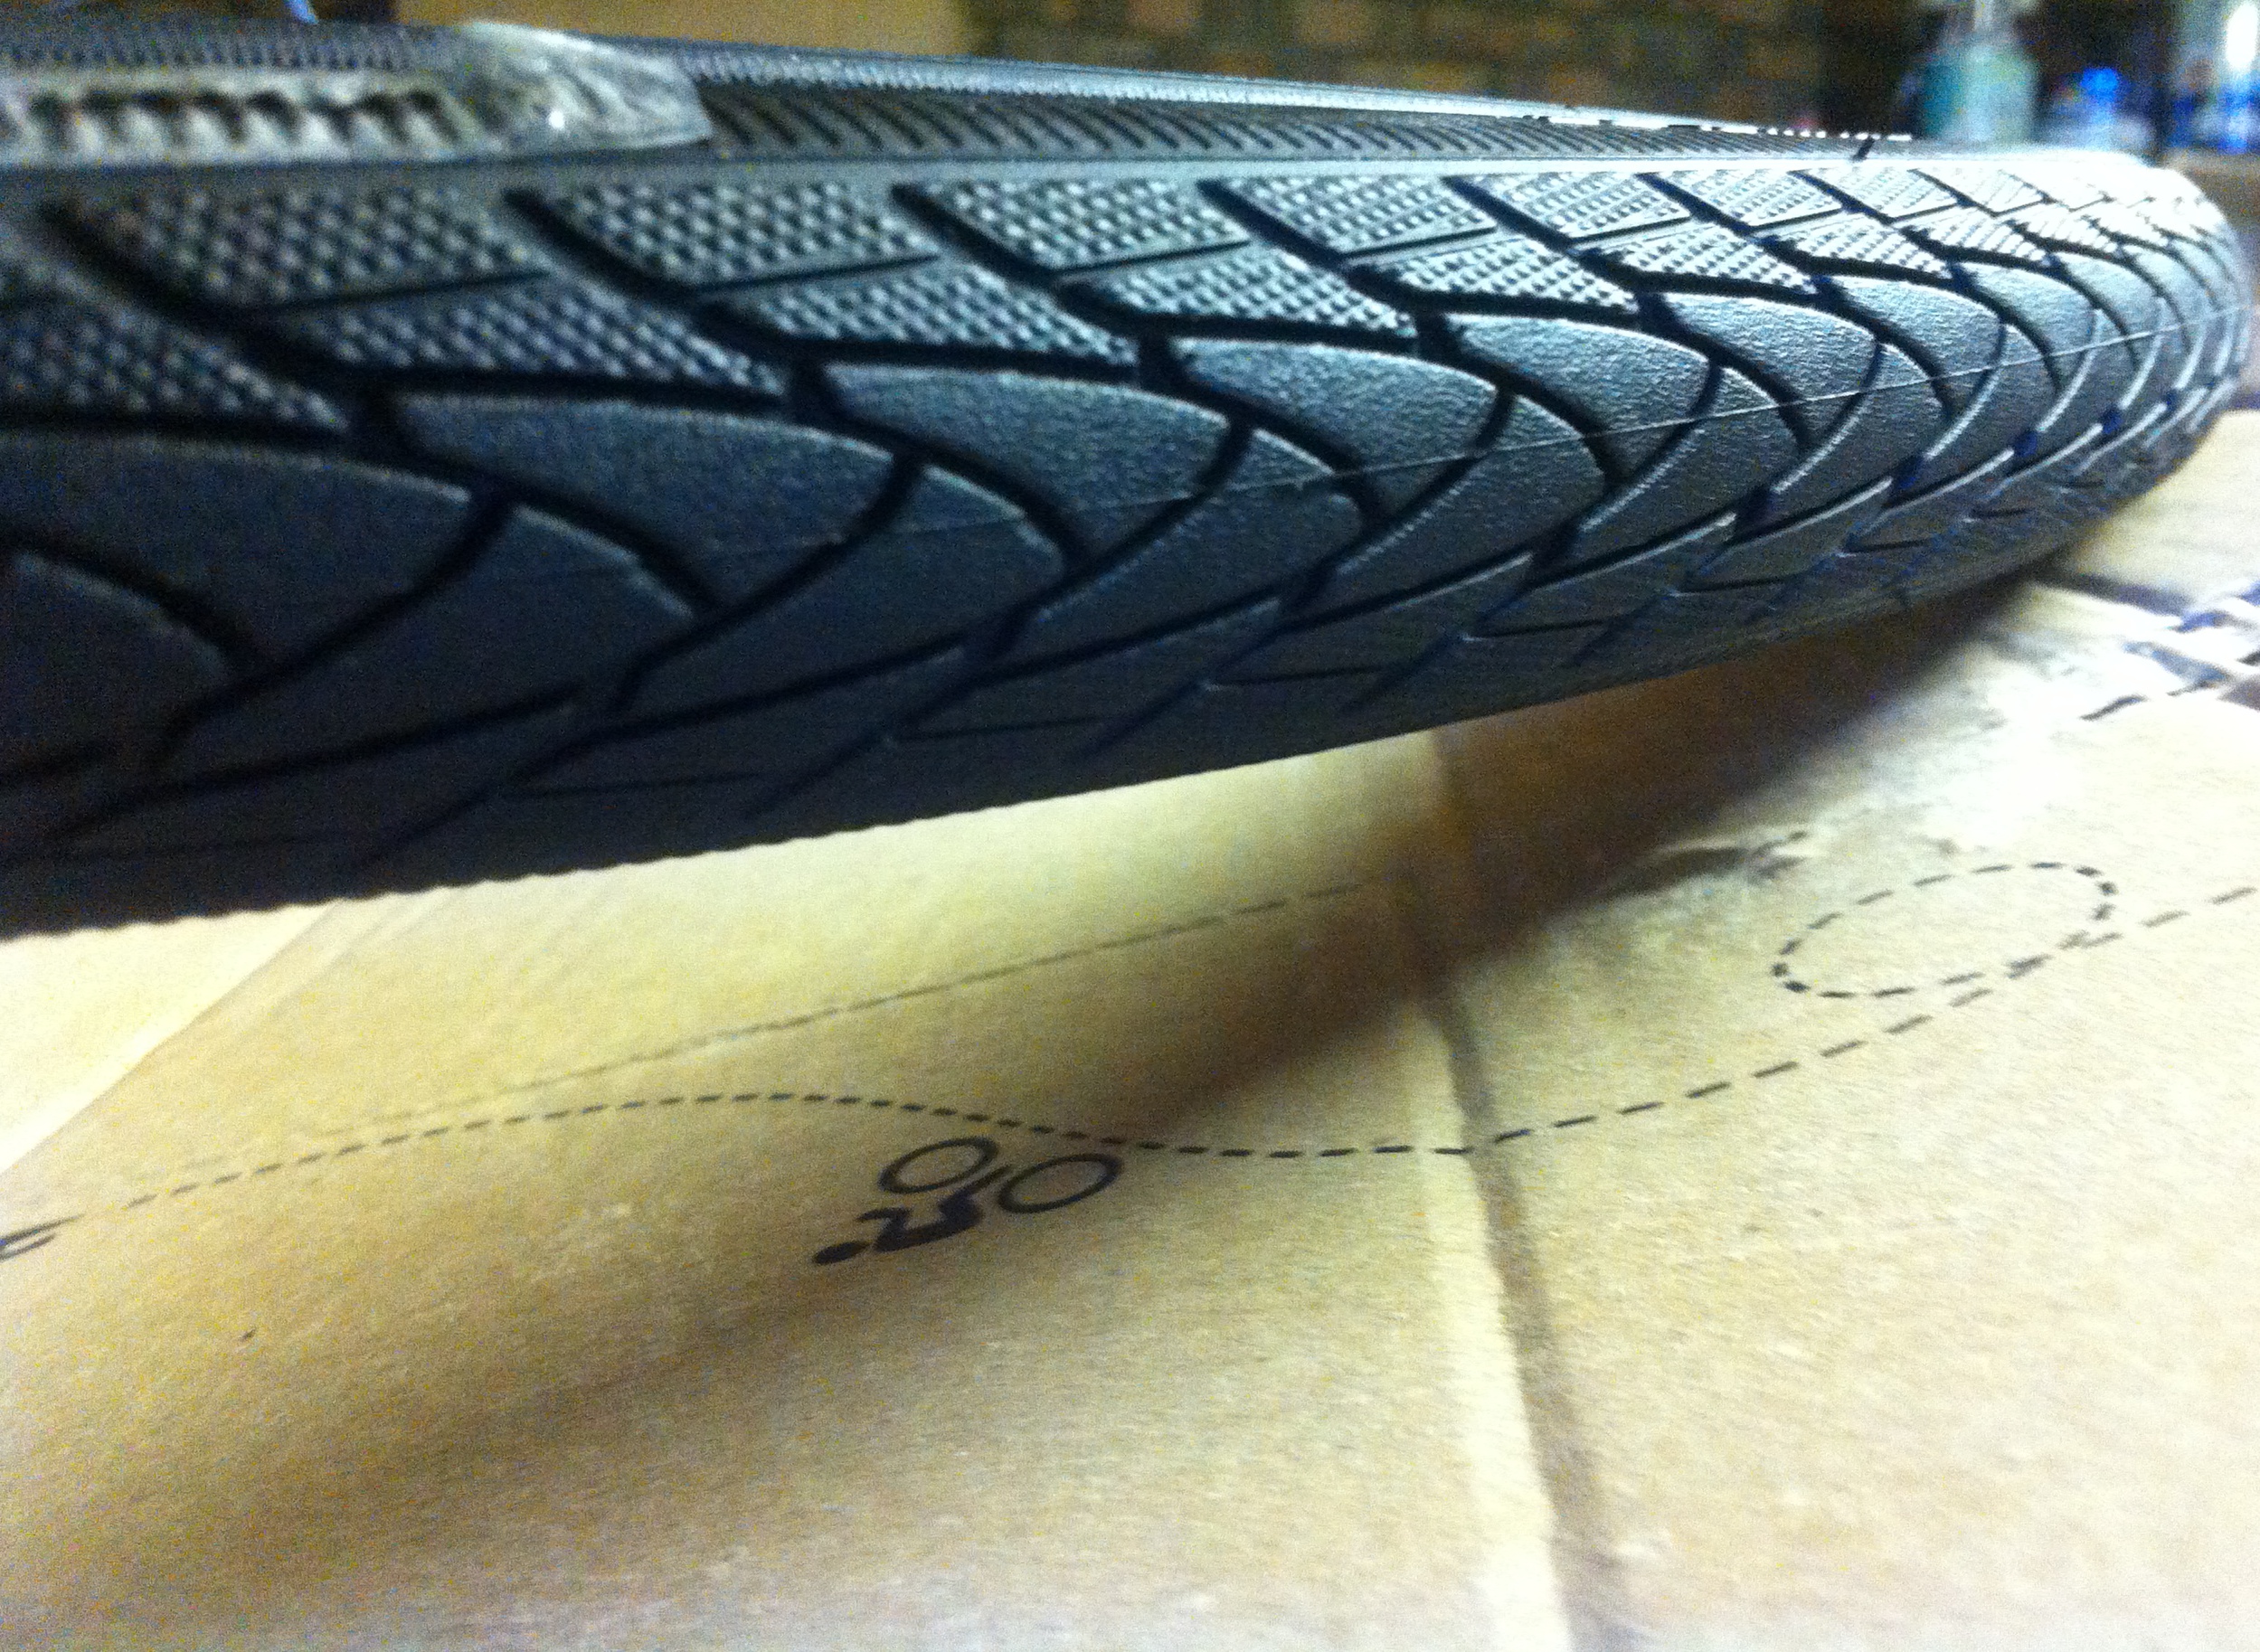 schwalbe tyres puncture resistant